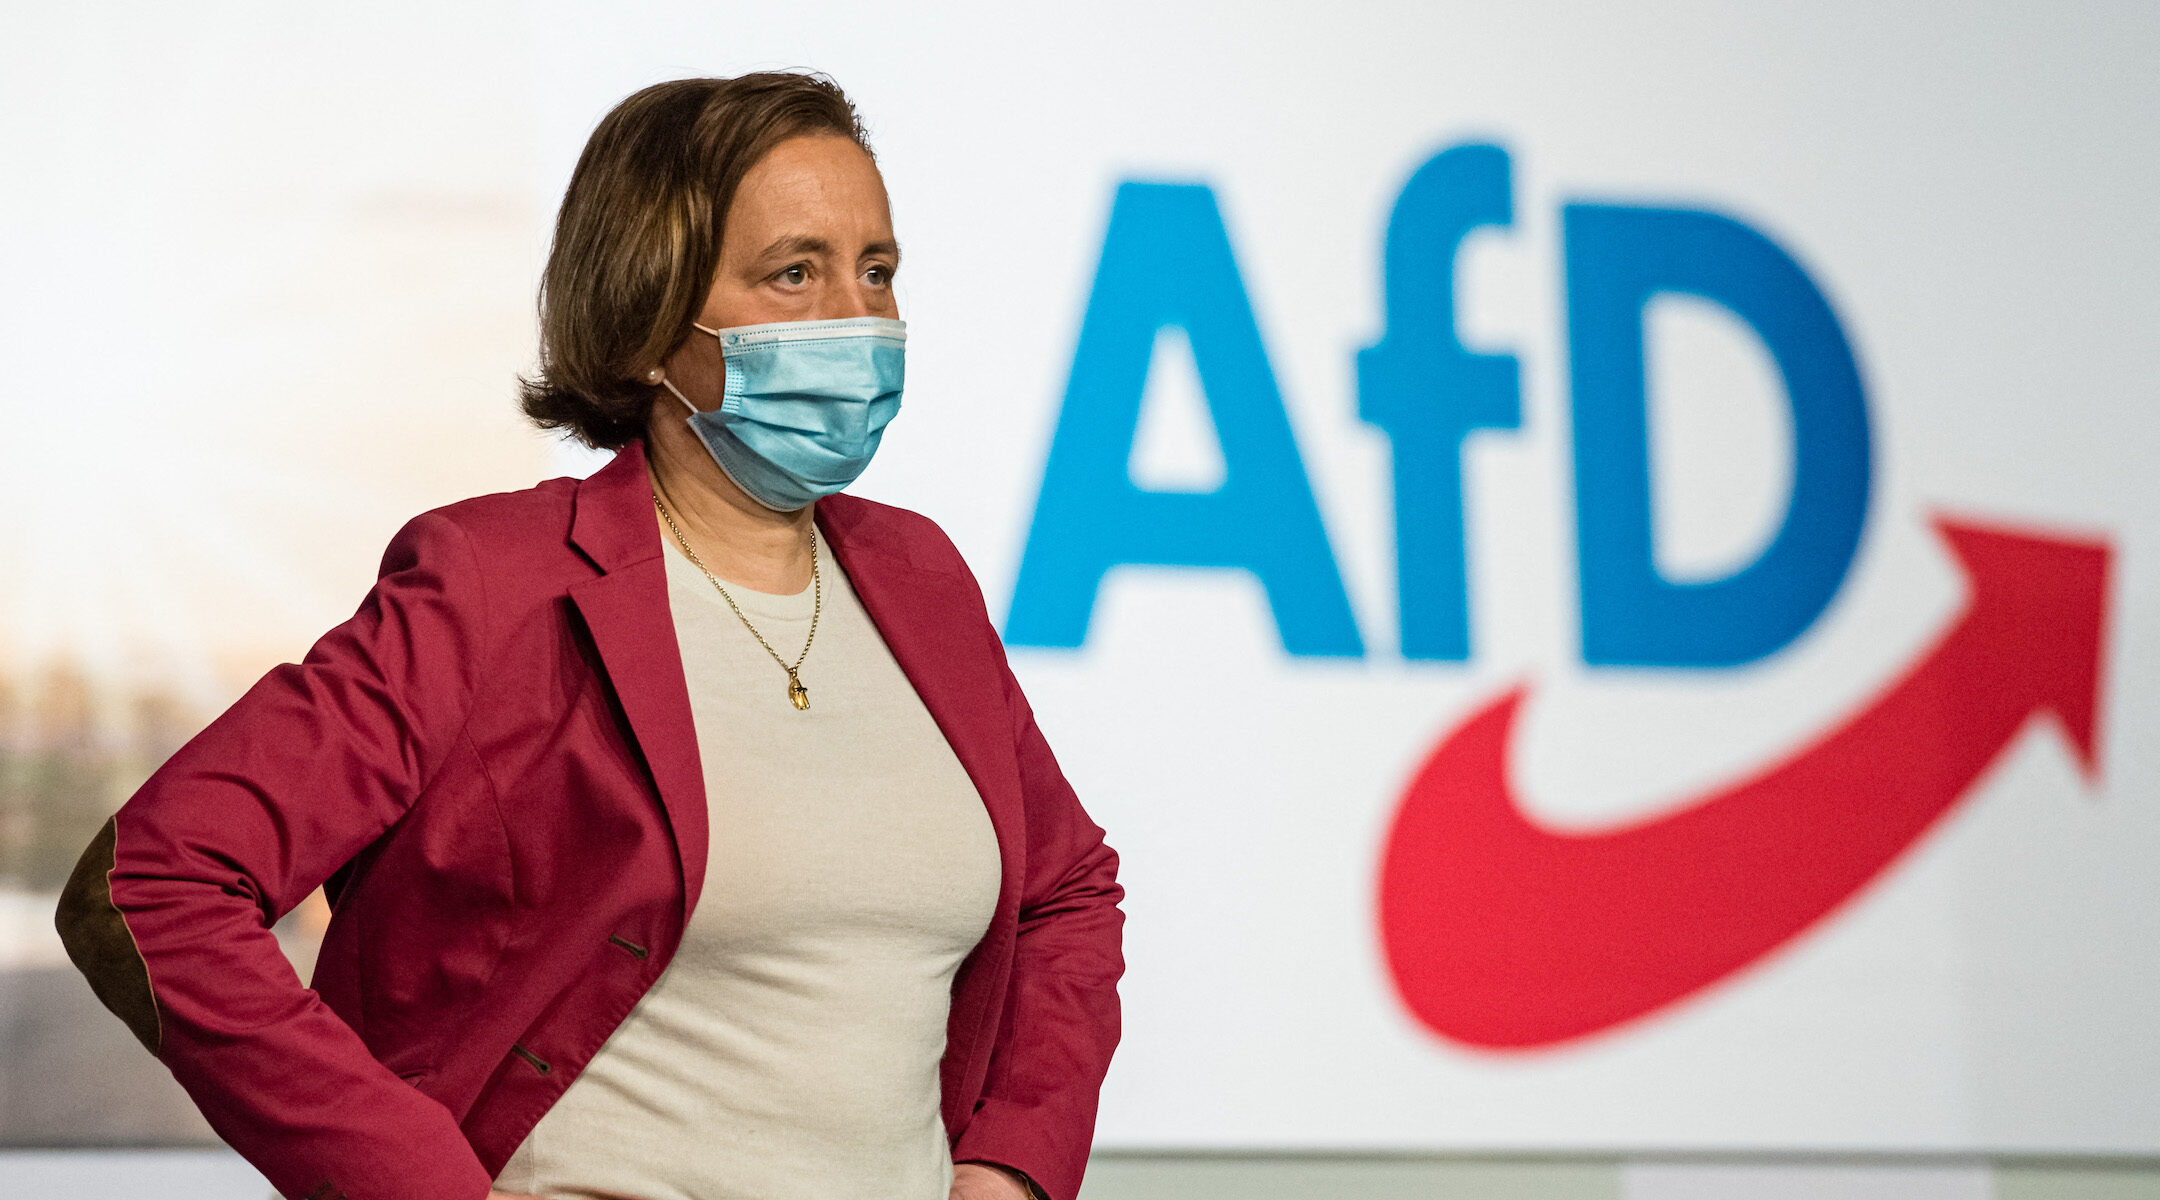 Alternative for Germany (AfD) deputy leader Beatrix von Storch